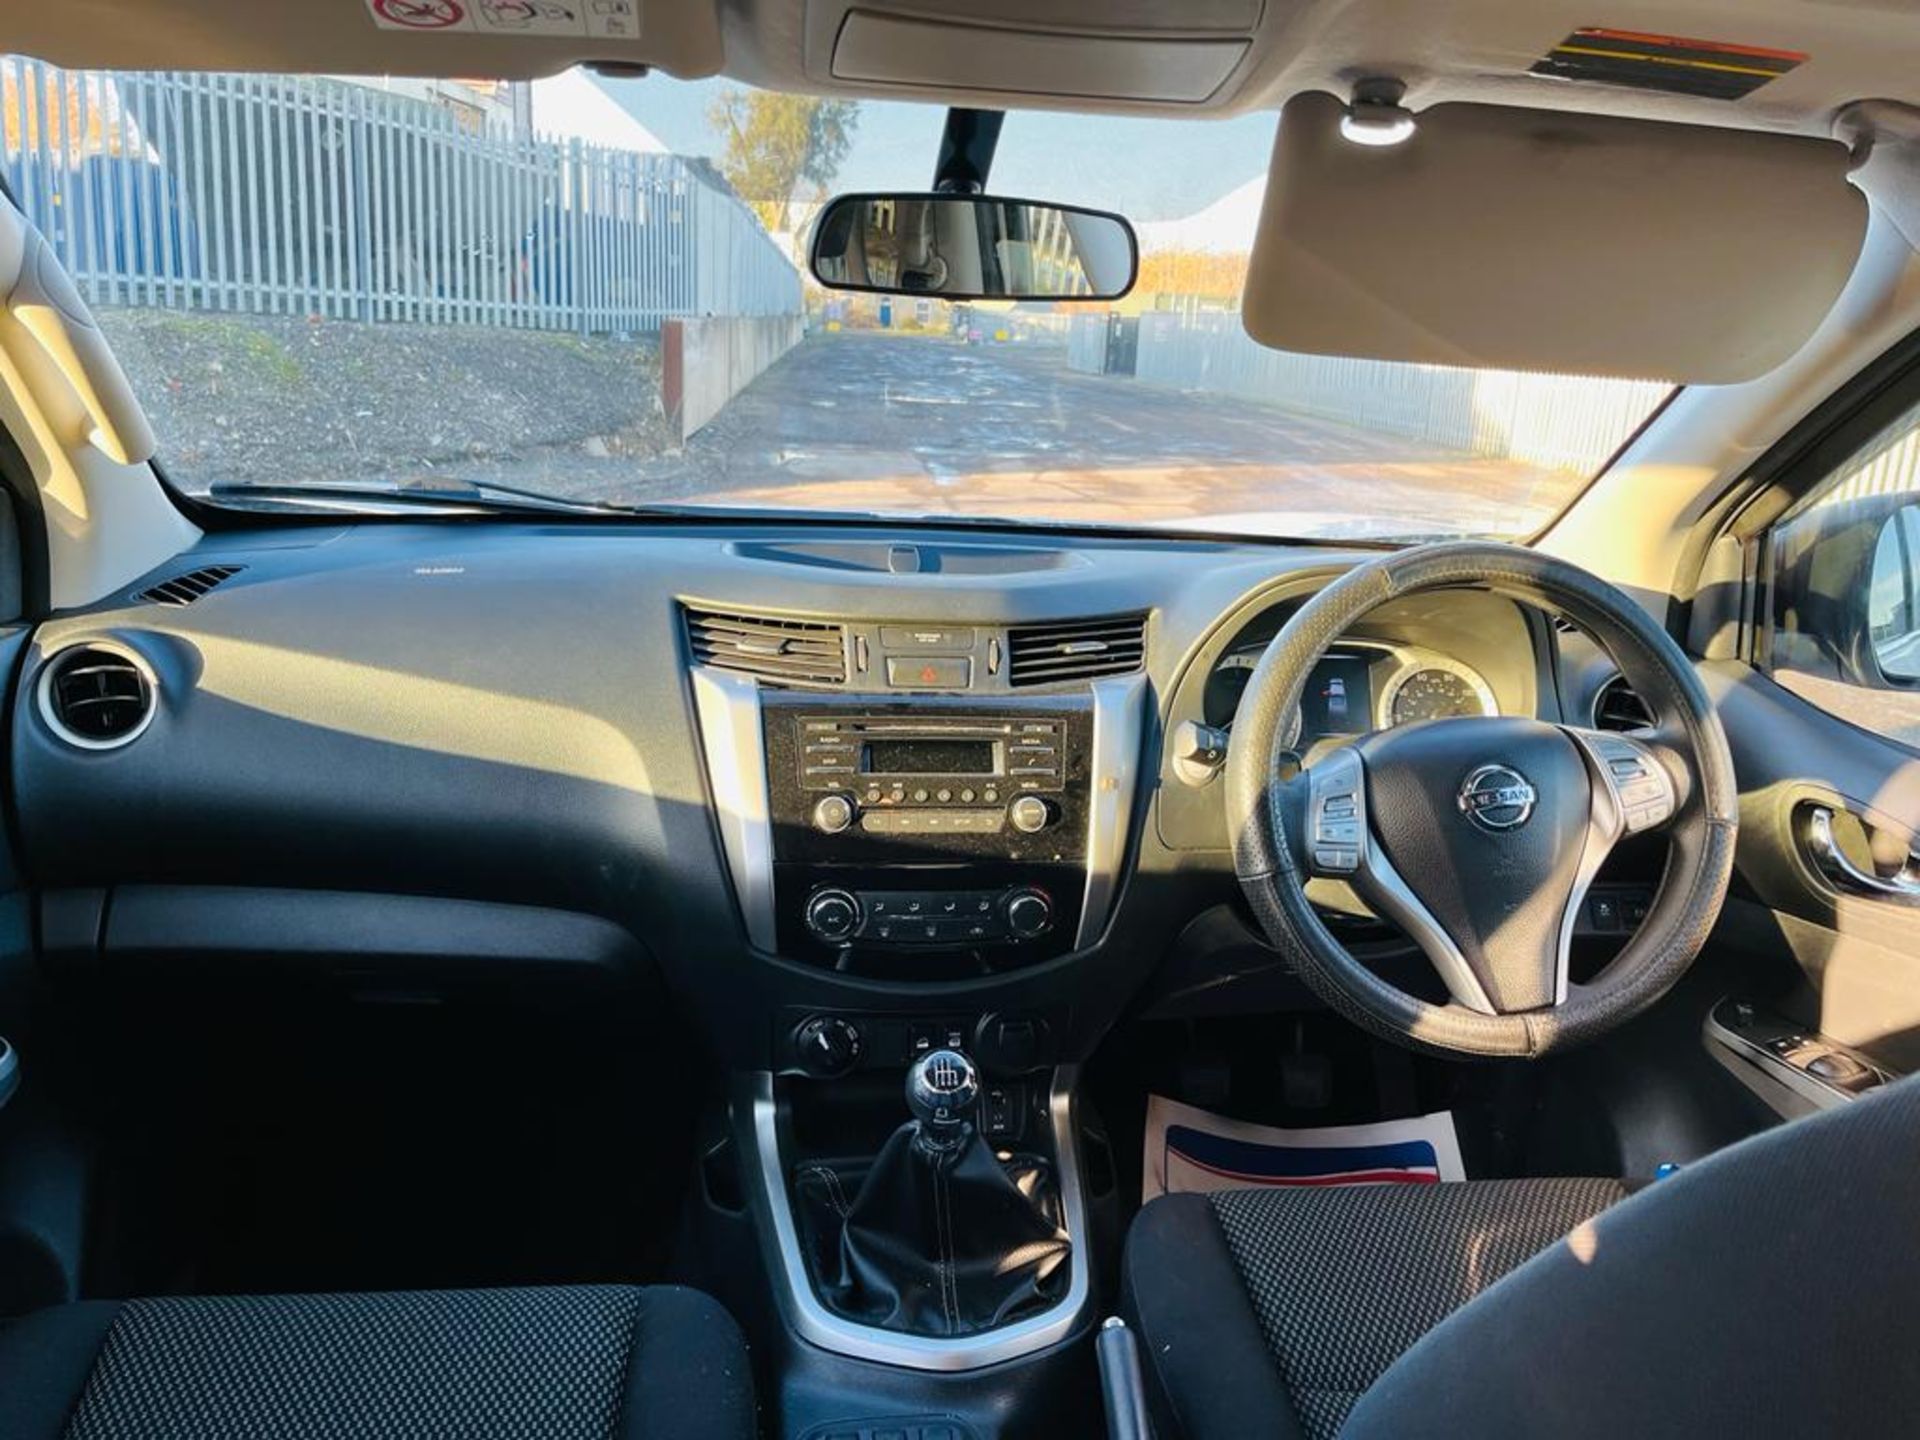 Nissan Navara 2.3 DCI 163 Acenta CrewCab 4WD Pickup 2019 '19 Reg' ULEZ Compliant - Image 15 of 33